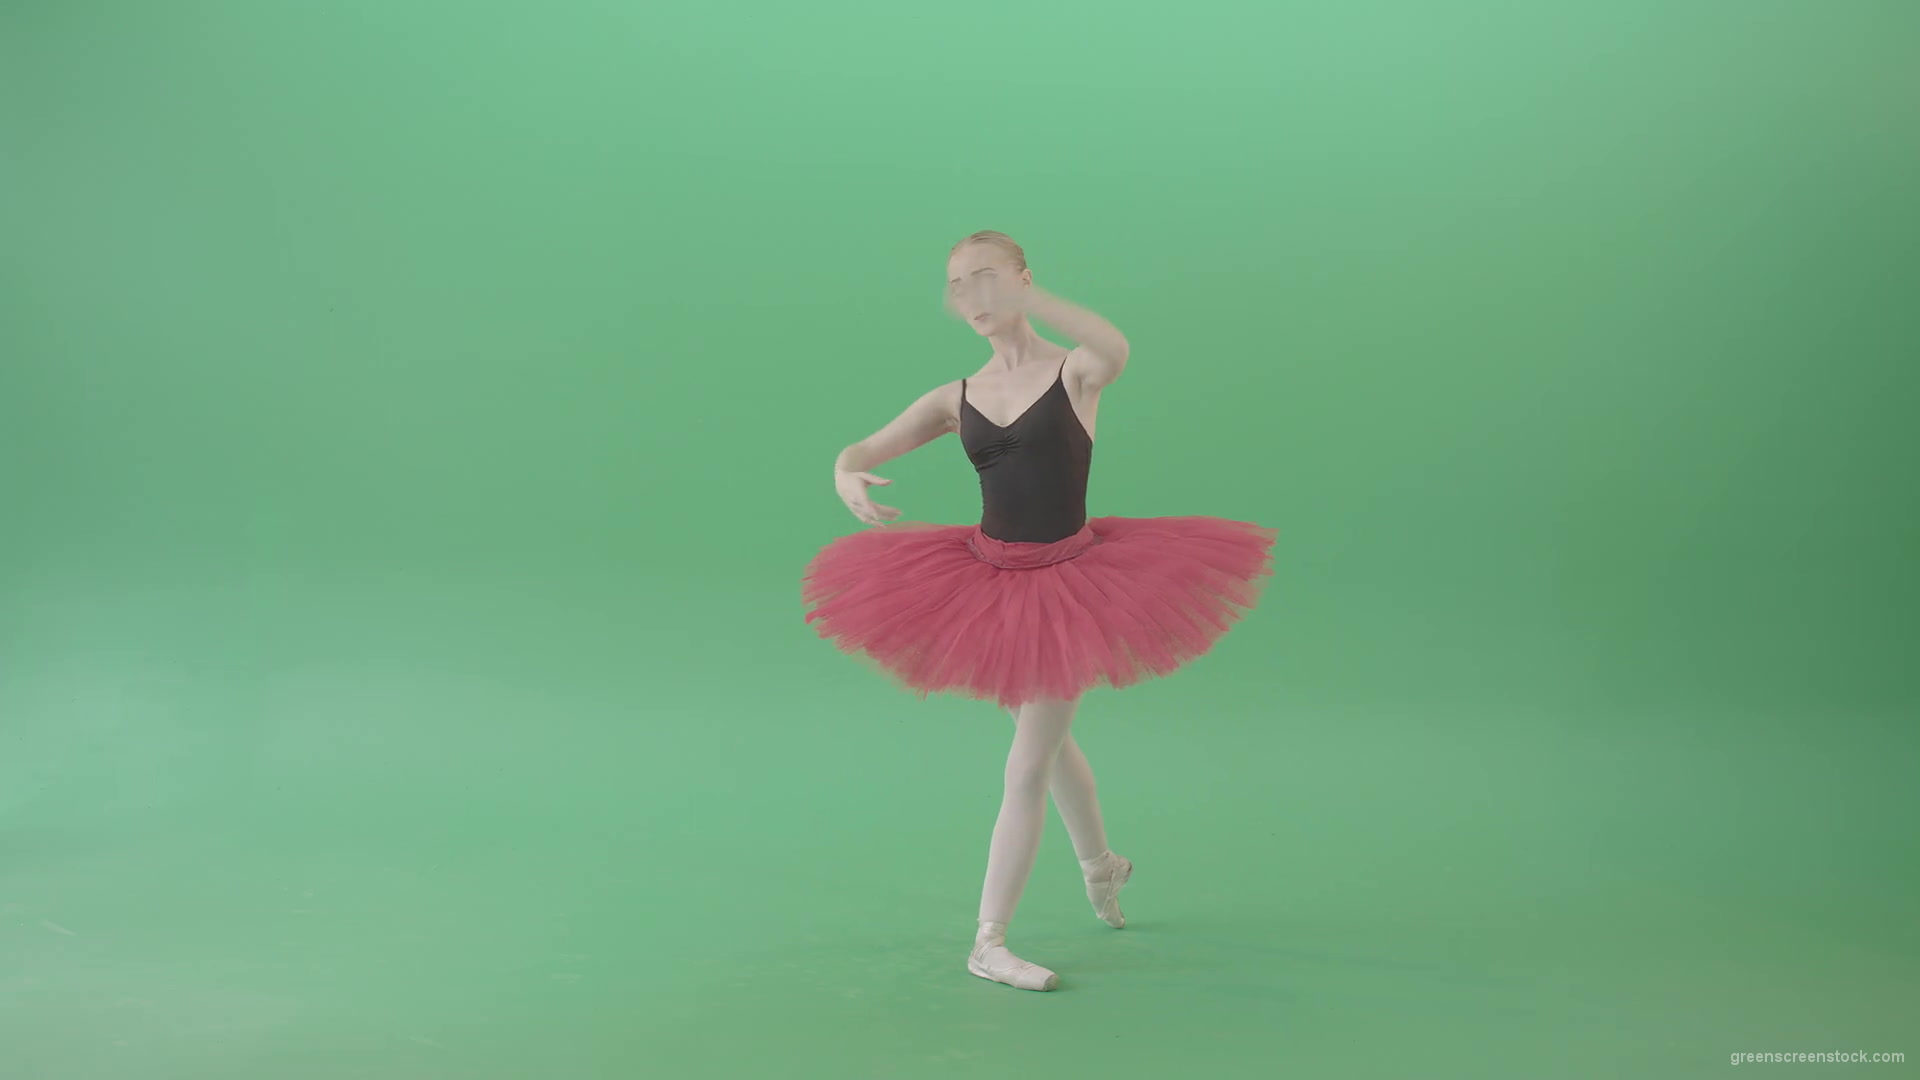 Elegant-elite-moves-by-ballet-dancing-blonde-girl-on-green-screen-4K-Video-Footage-1920_004 Green Screen Stock